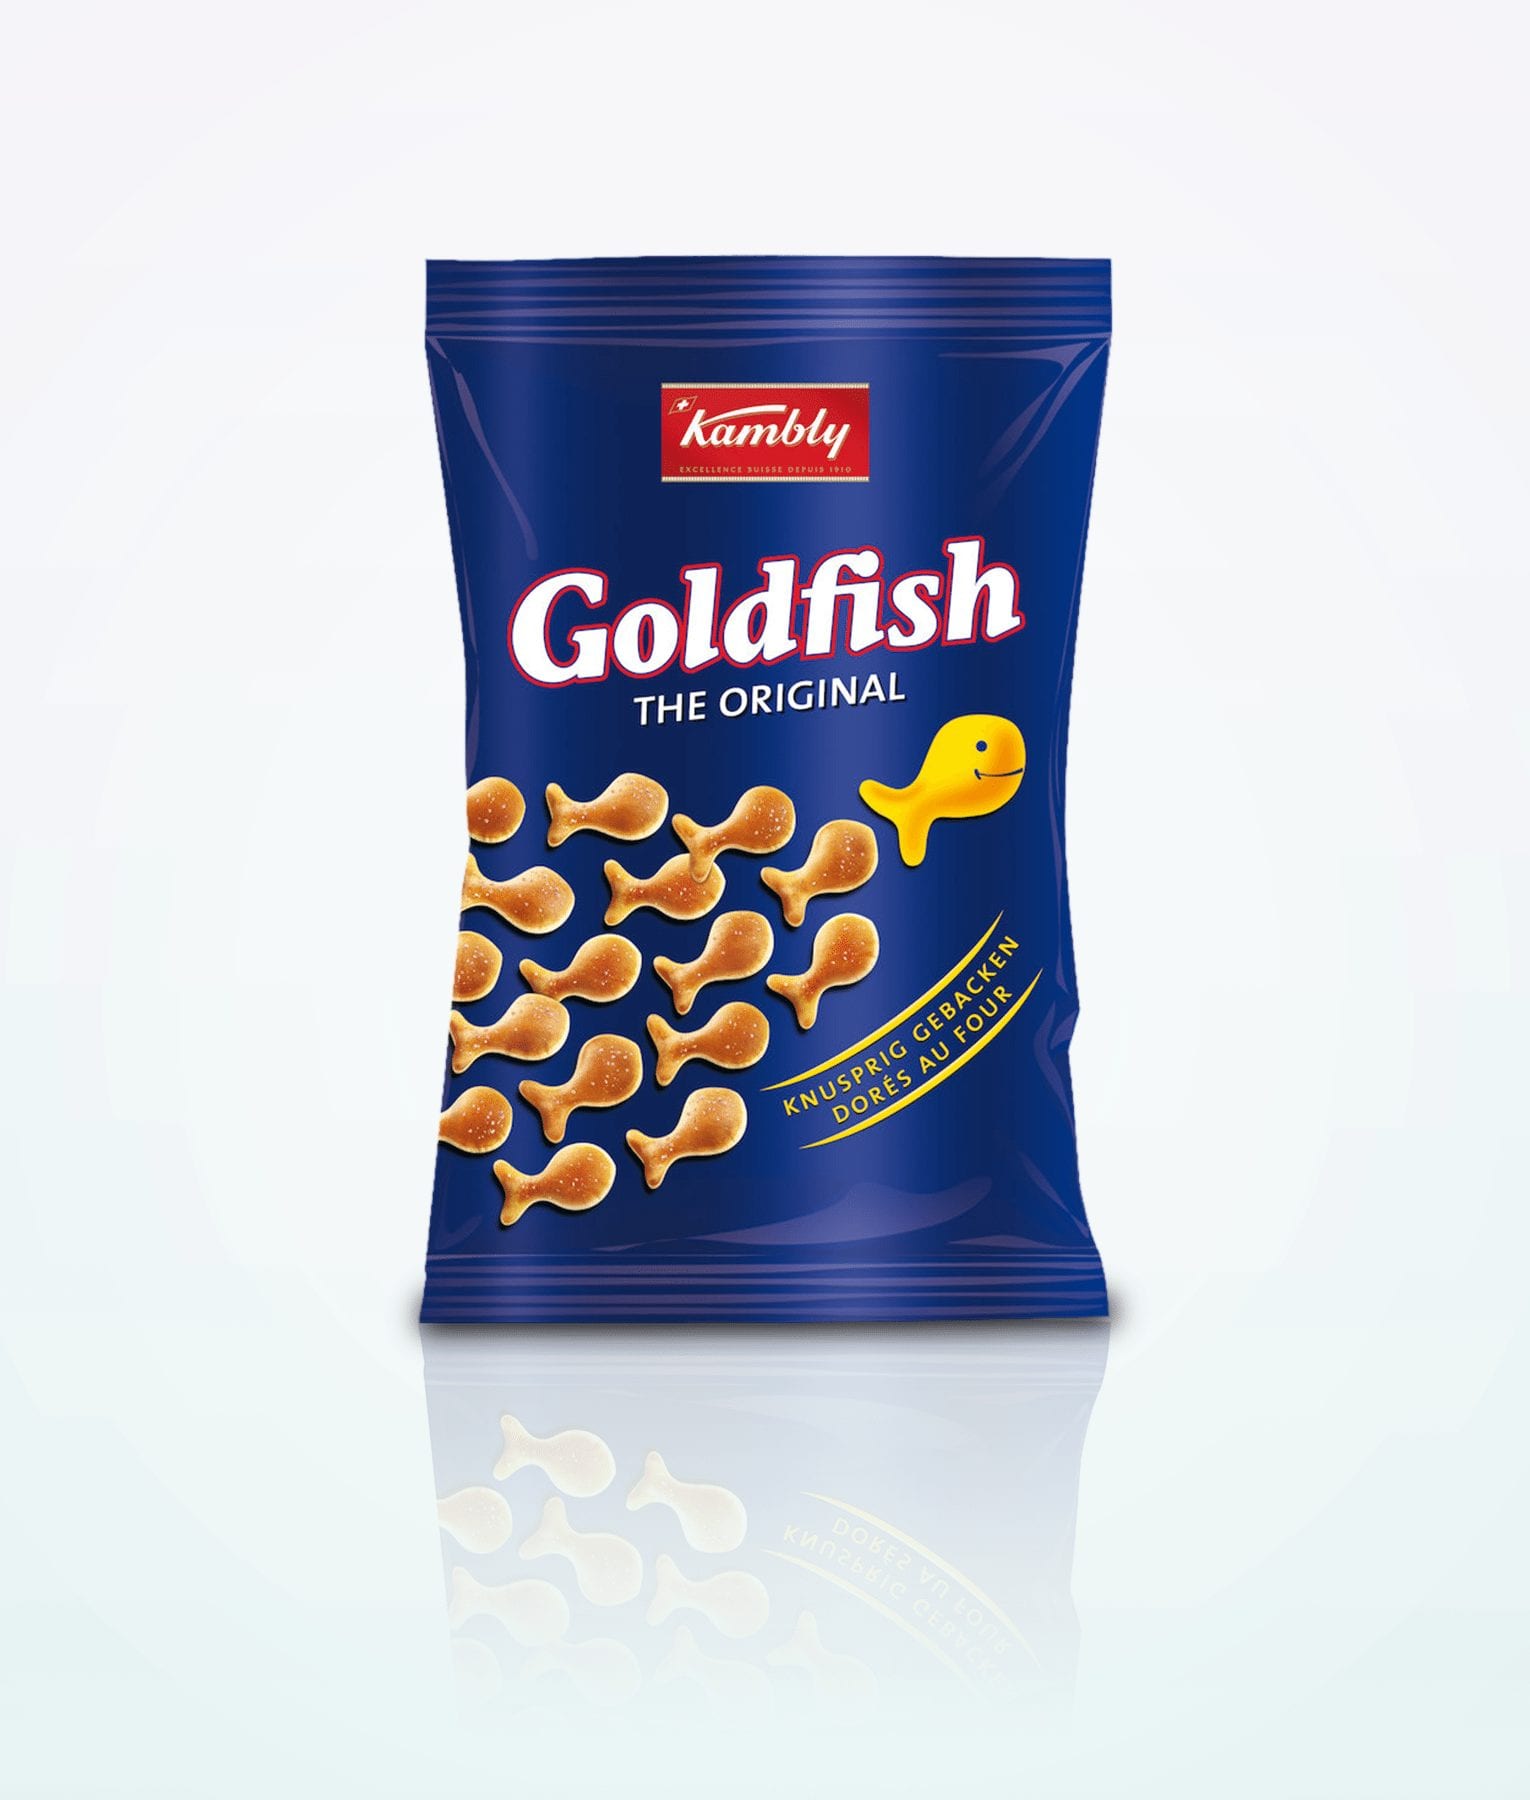 Kambly Original Gold Fish Crakers 160g.jpg